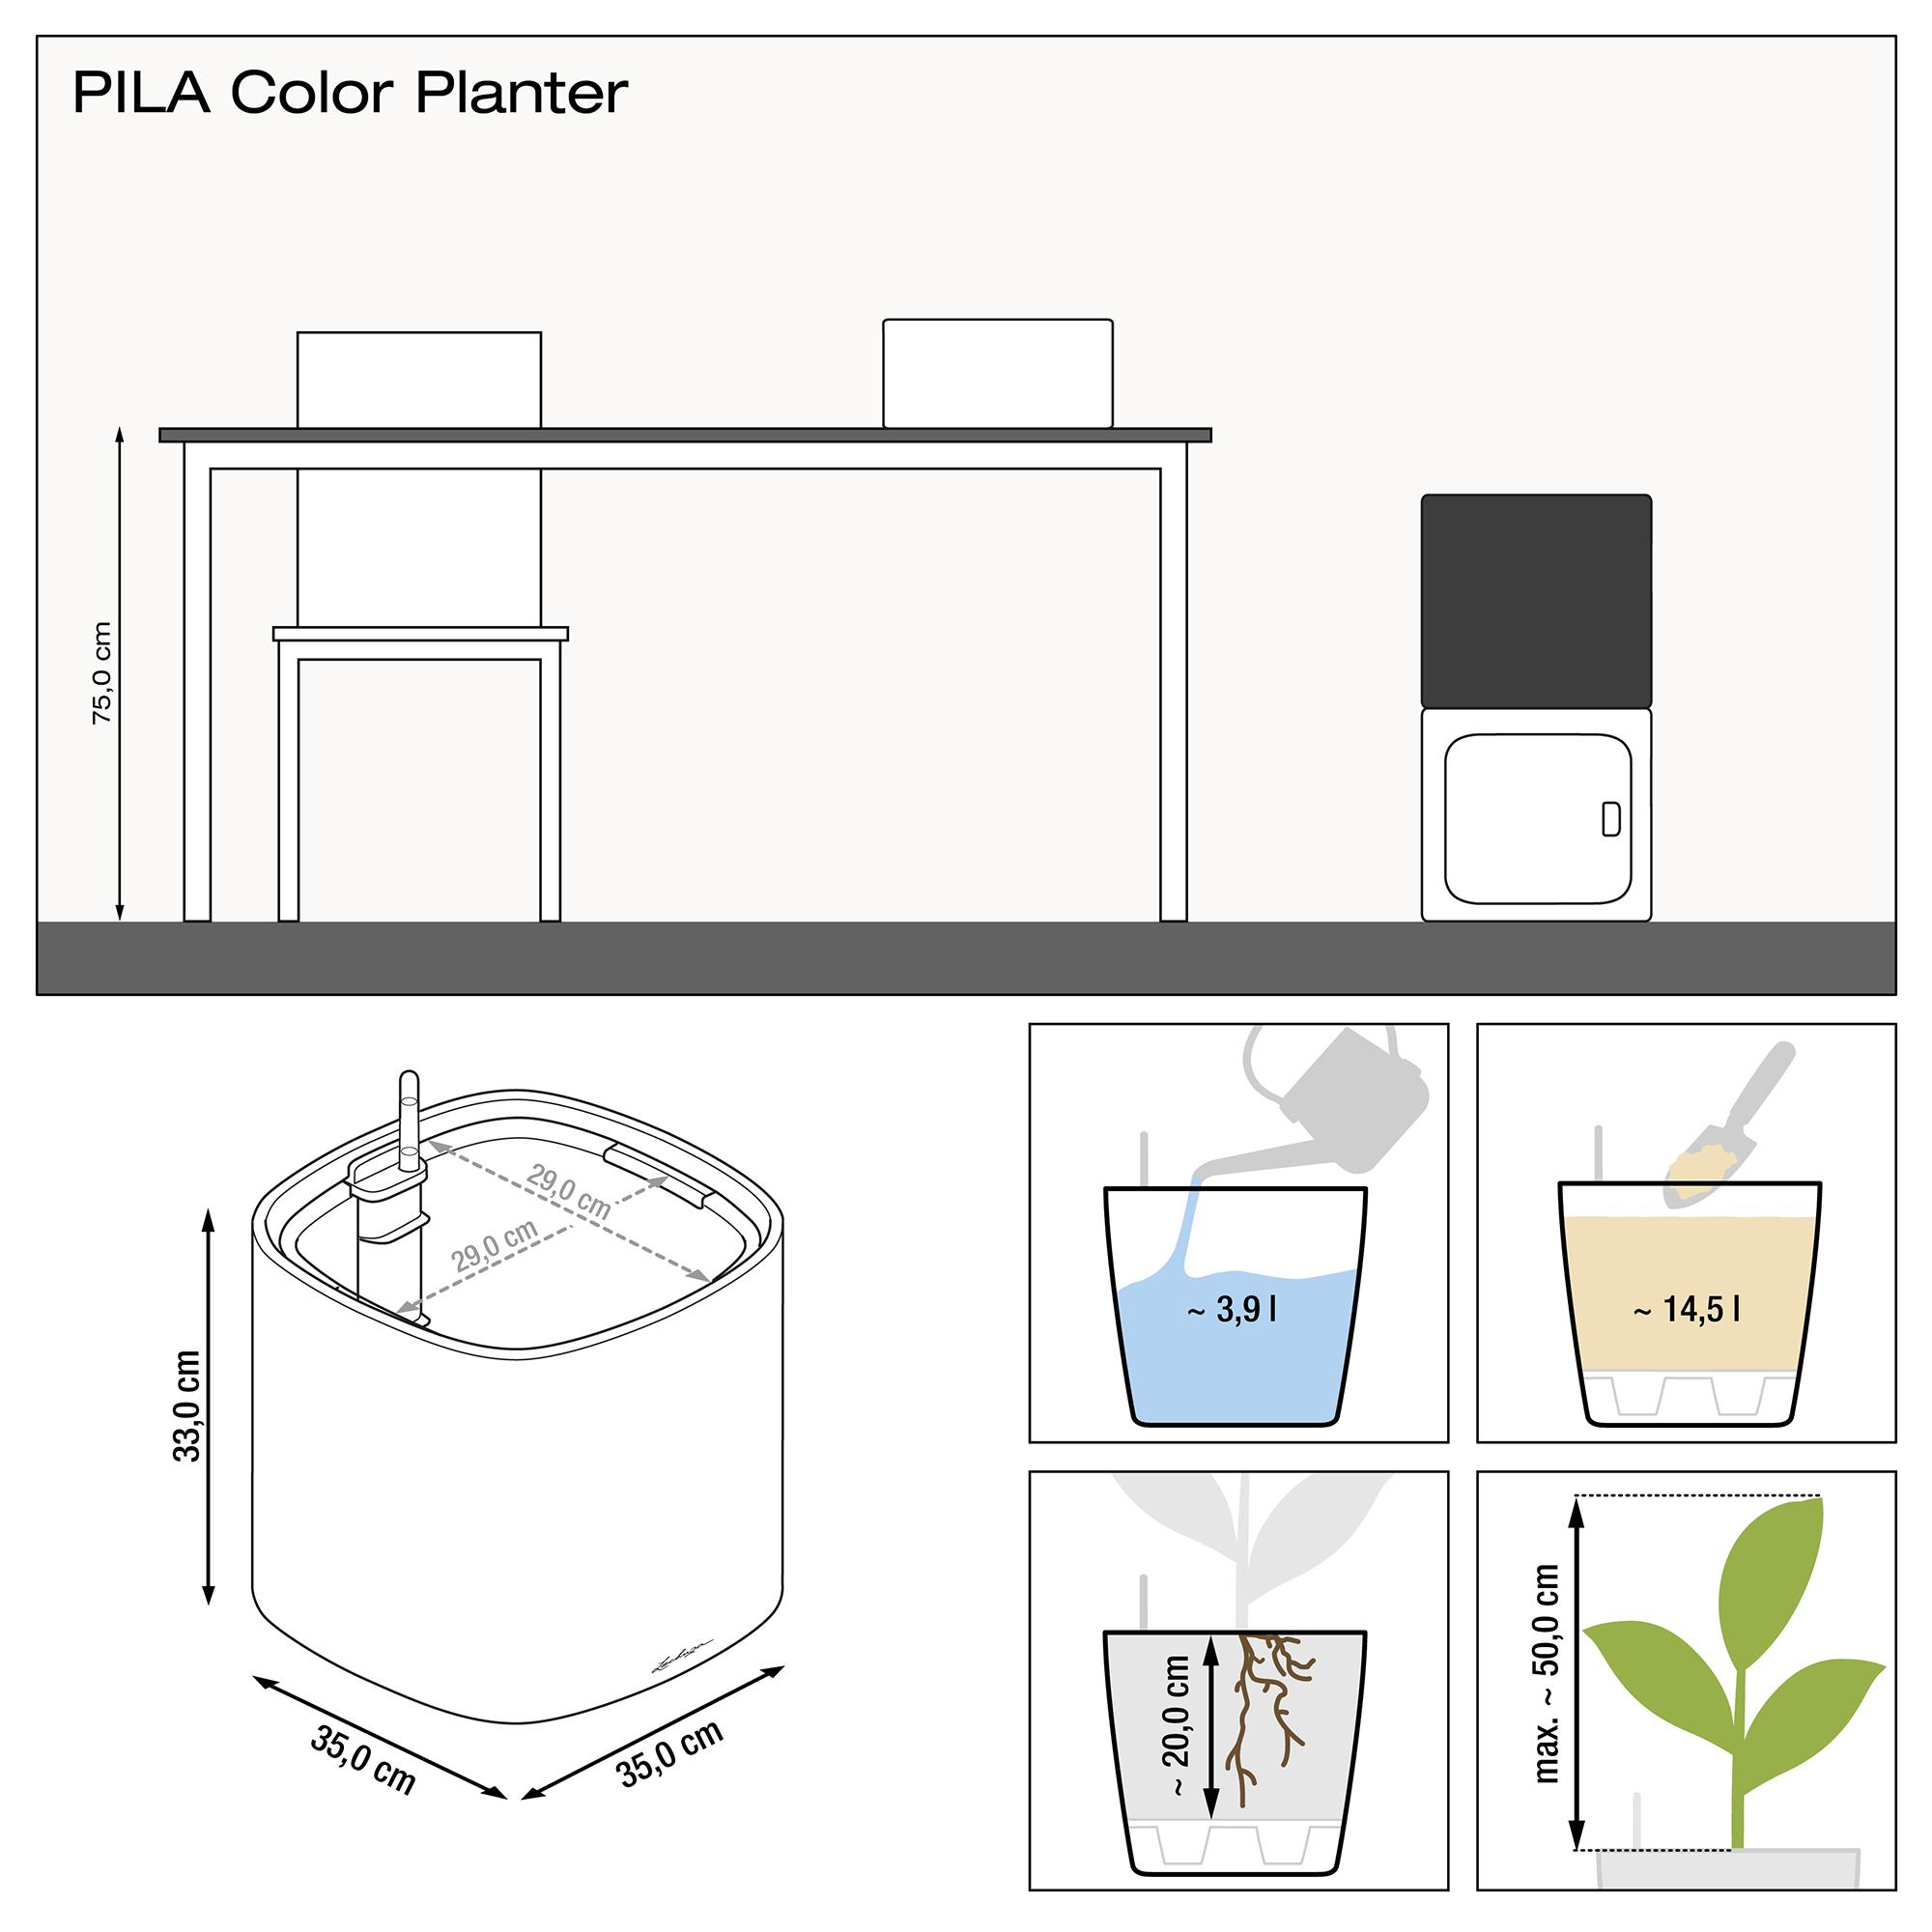 le_pila-color-planter35_product_addi_nz